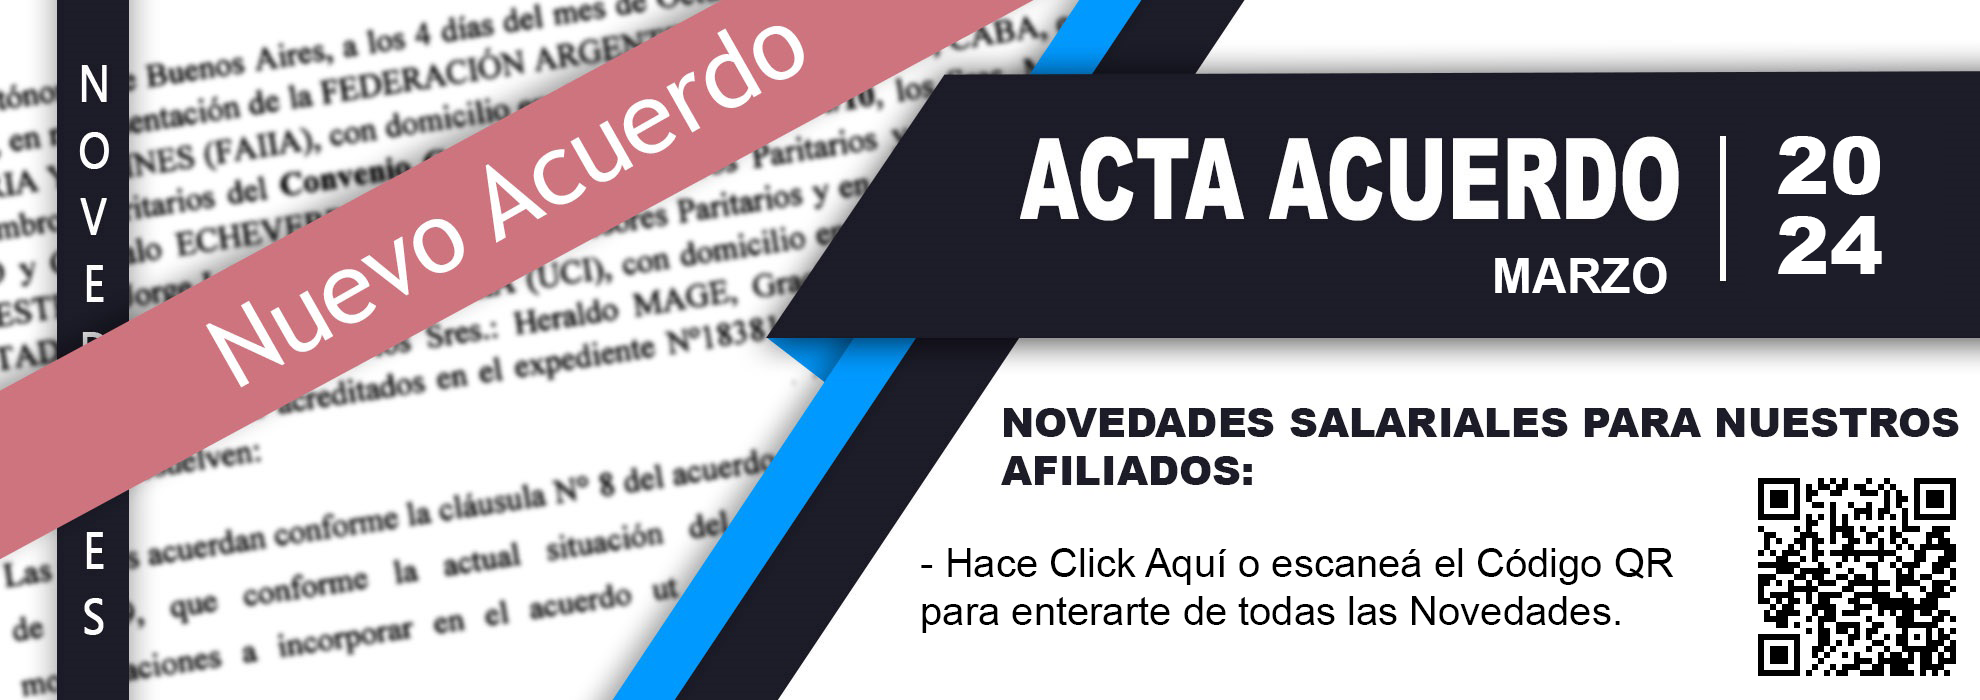 actaAcuerdo24-03